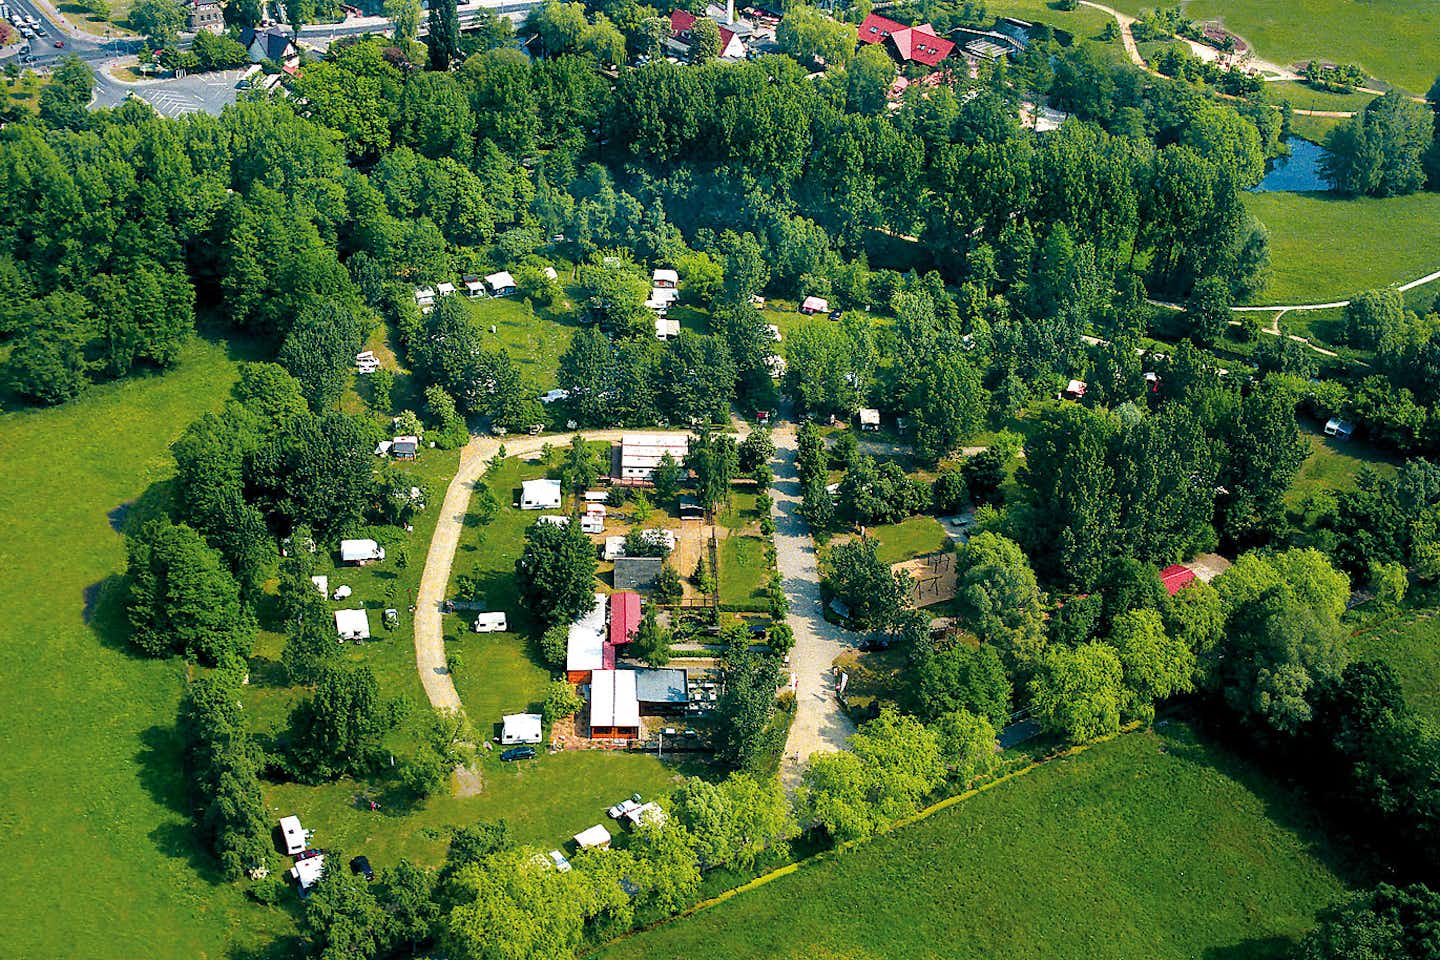 KNAUS Campingpark Lübben/Spreewald  Spreewald-Camping  - Luftaufnahme des Campingplatzes im Grünen